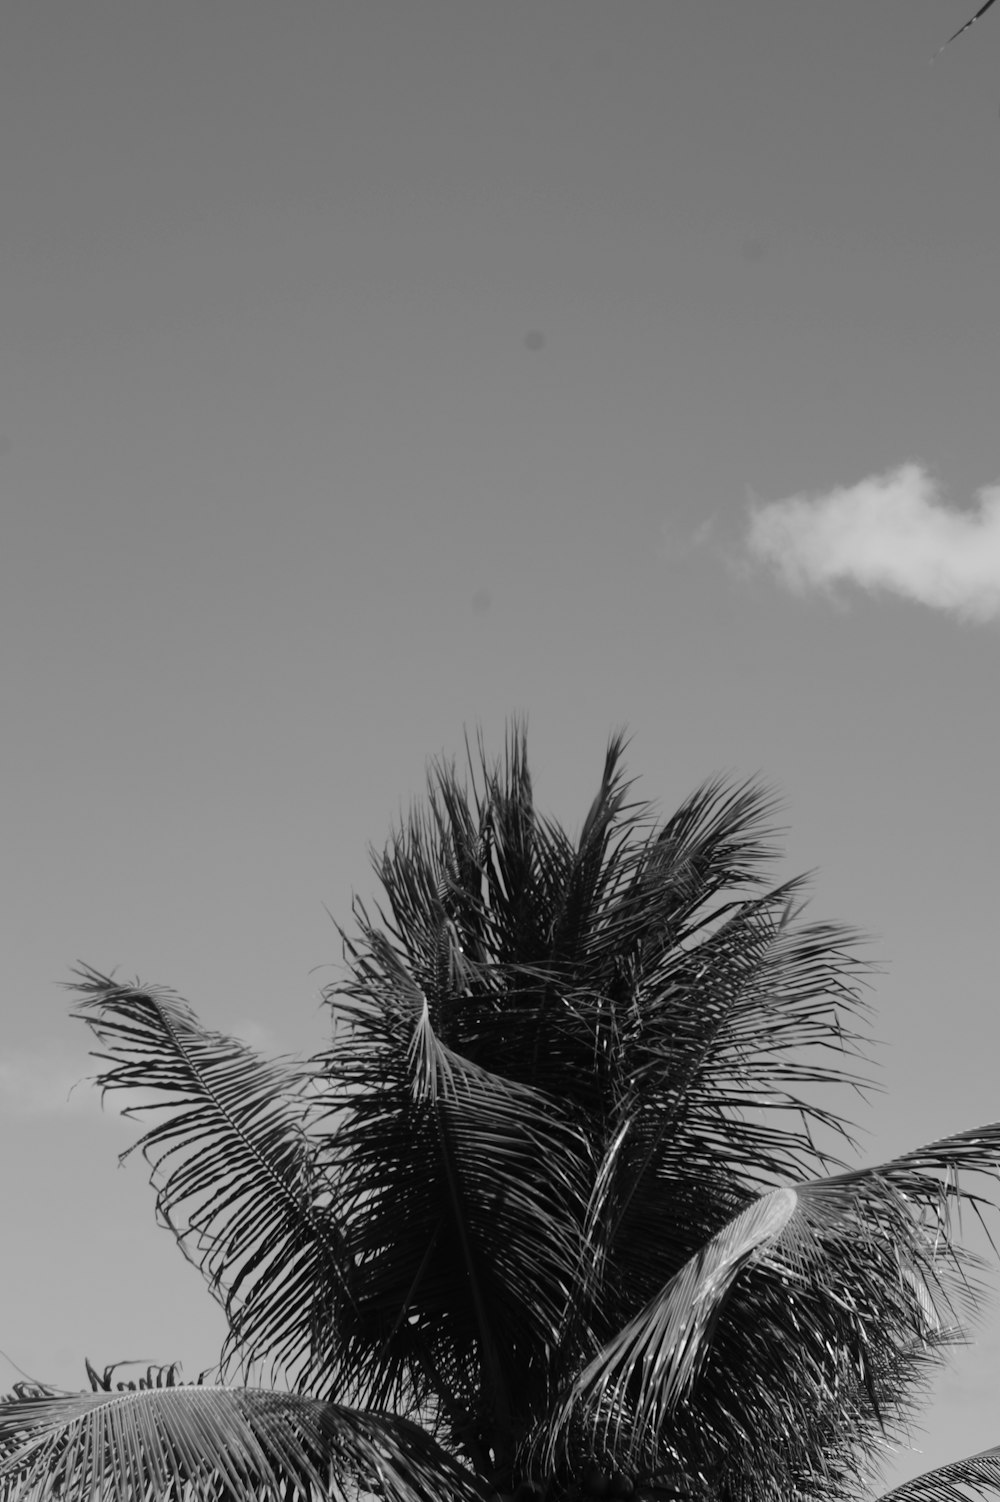 a palm tree under a cloudy sky